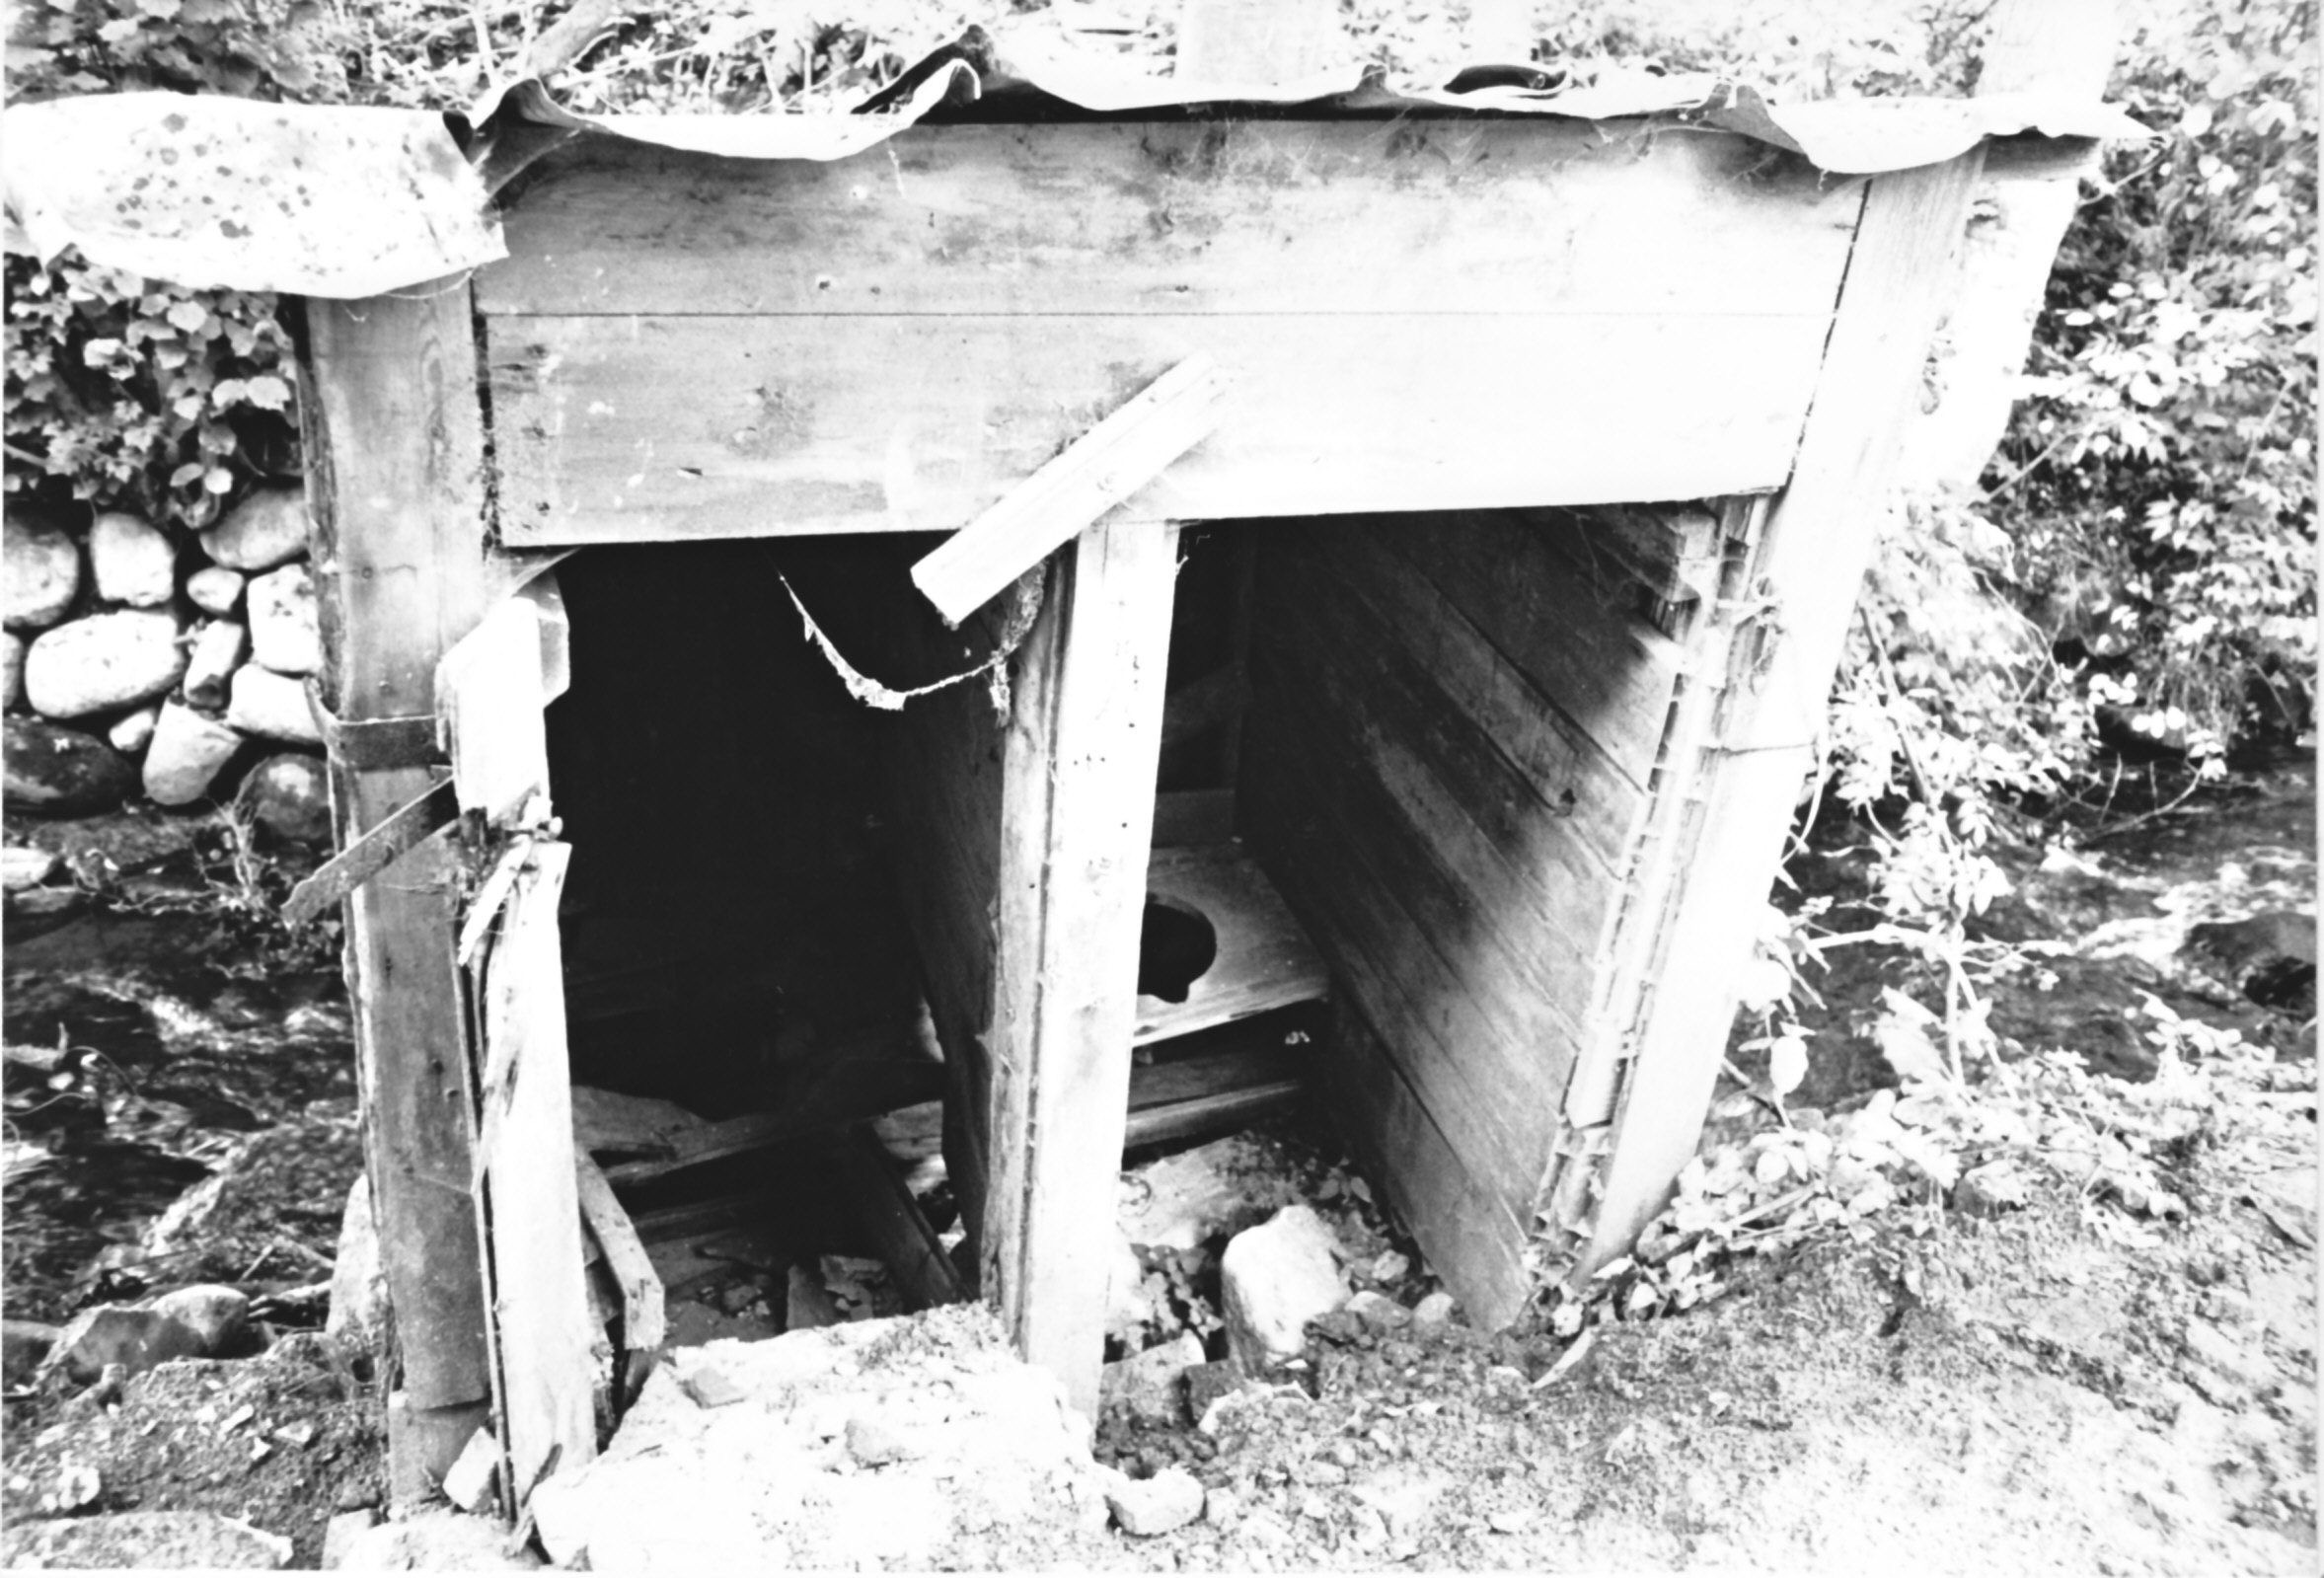 Toilet  - over bækken ved Rundemølle 1996